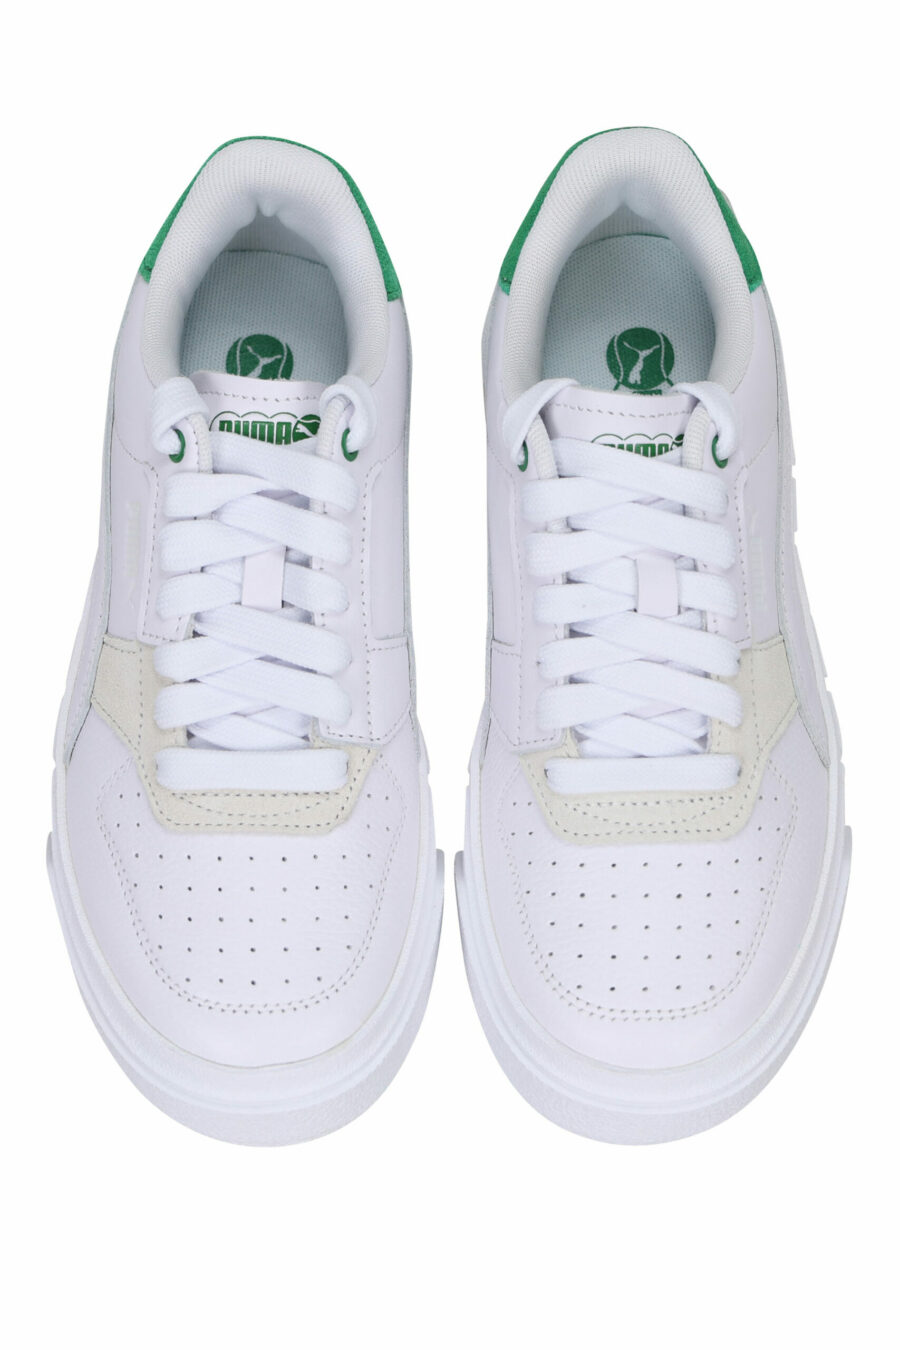 Zapatillas blancas con verde "cali court" - 4065454941770 4 scaled